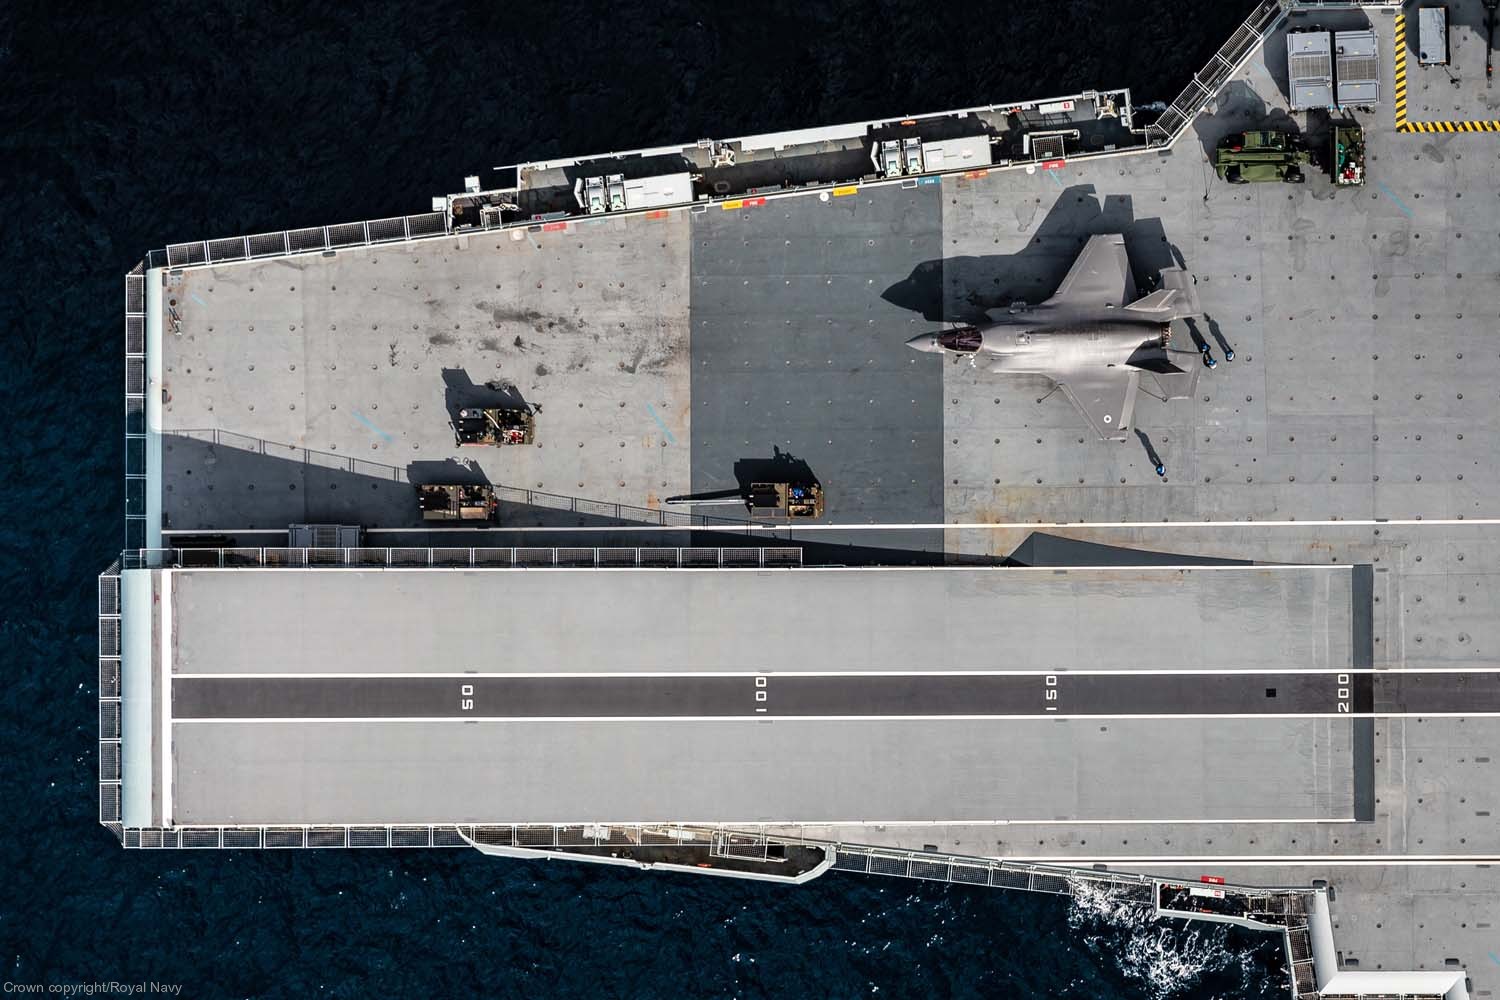 queen elizabeth class aircraft carrier stovl royal navy 90x f-35b ski-jump ramp